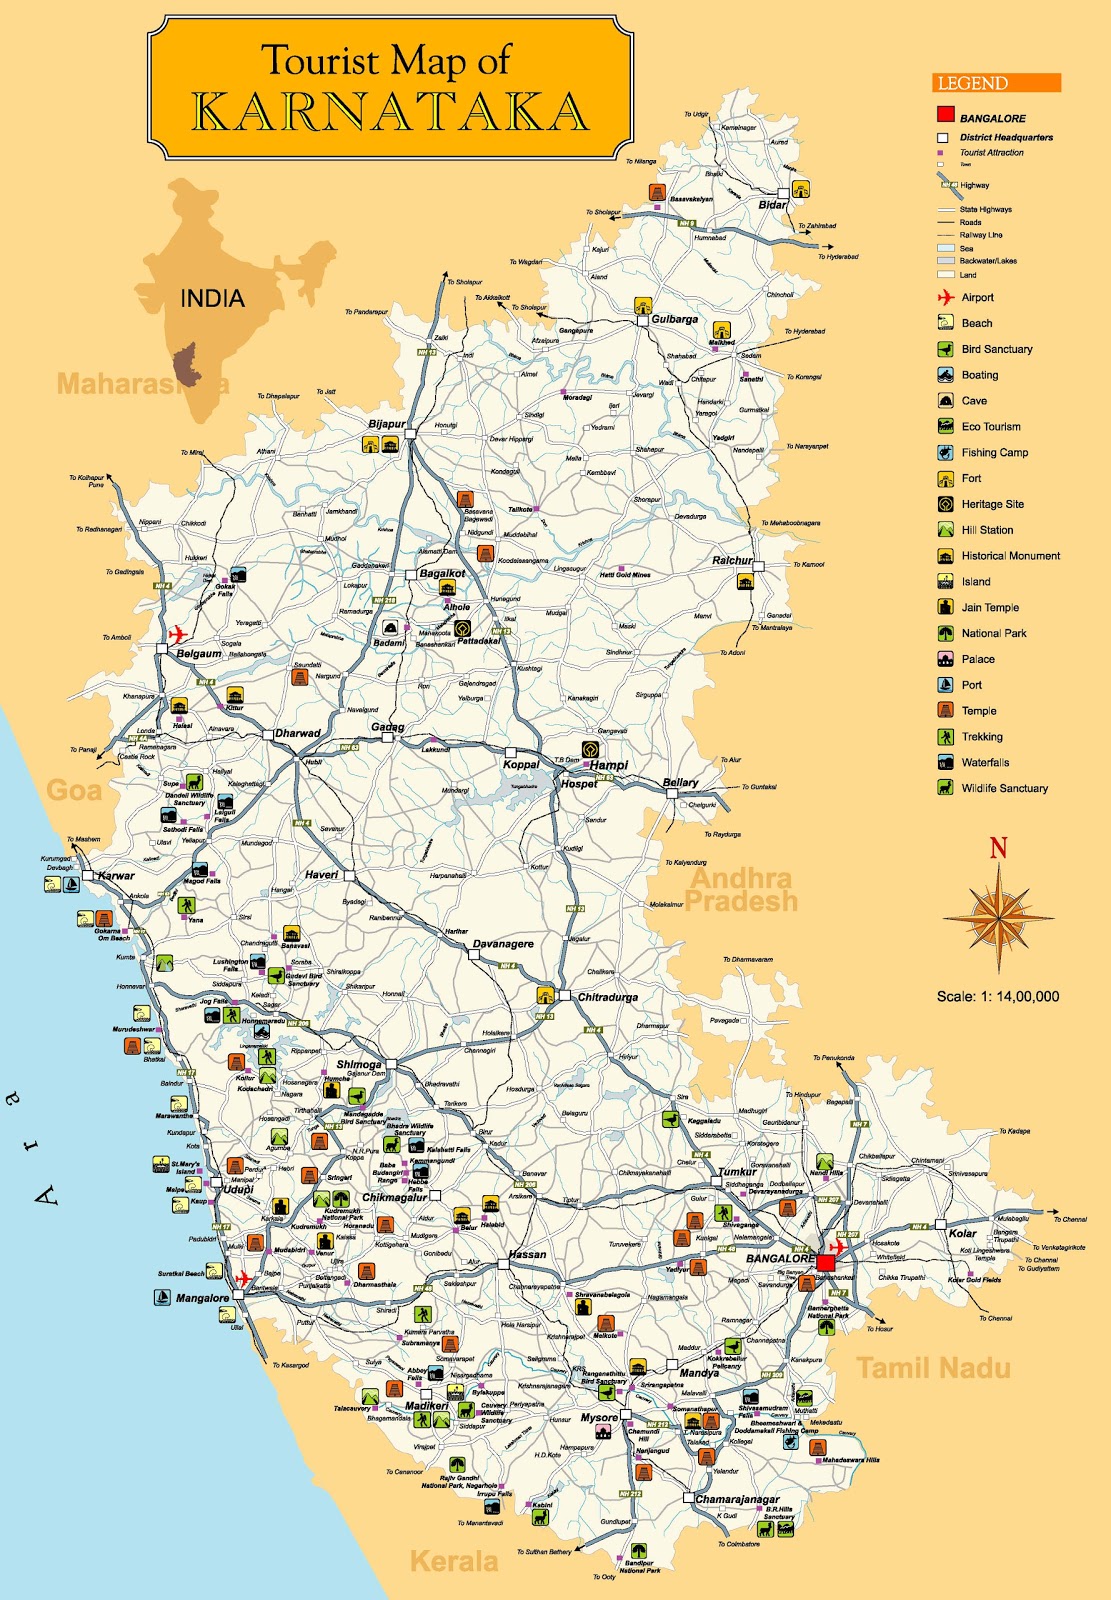 ALEMAARI: Tourist Map of Karnataka